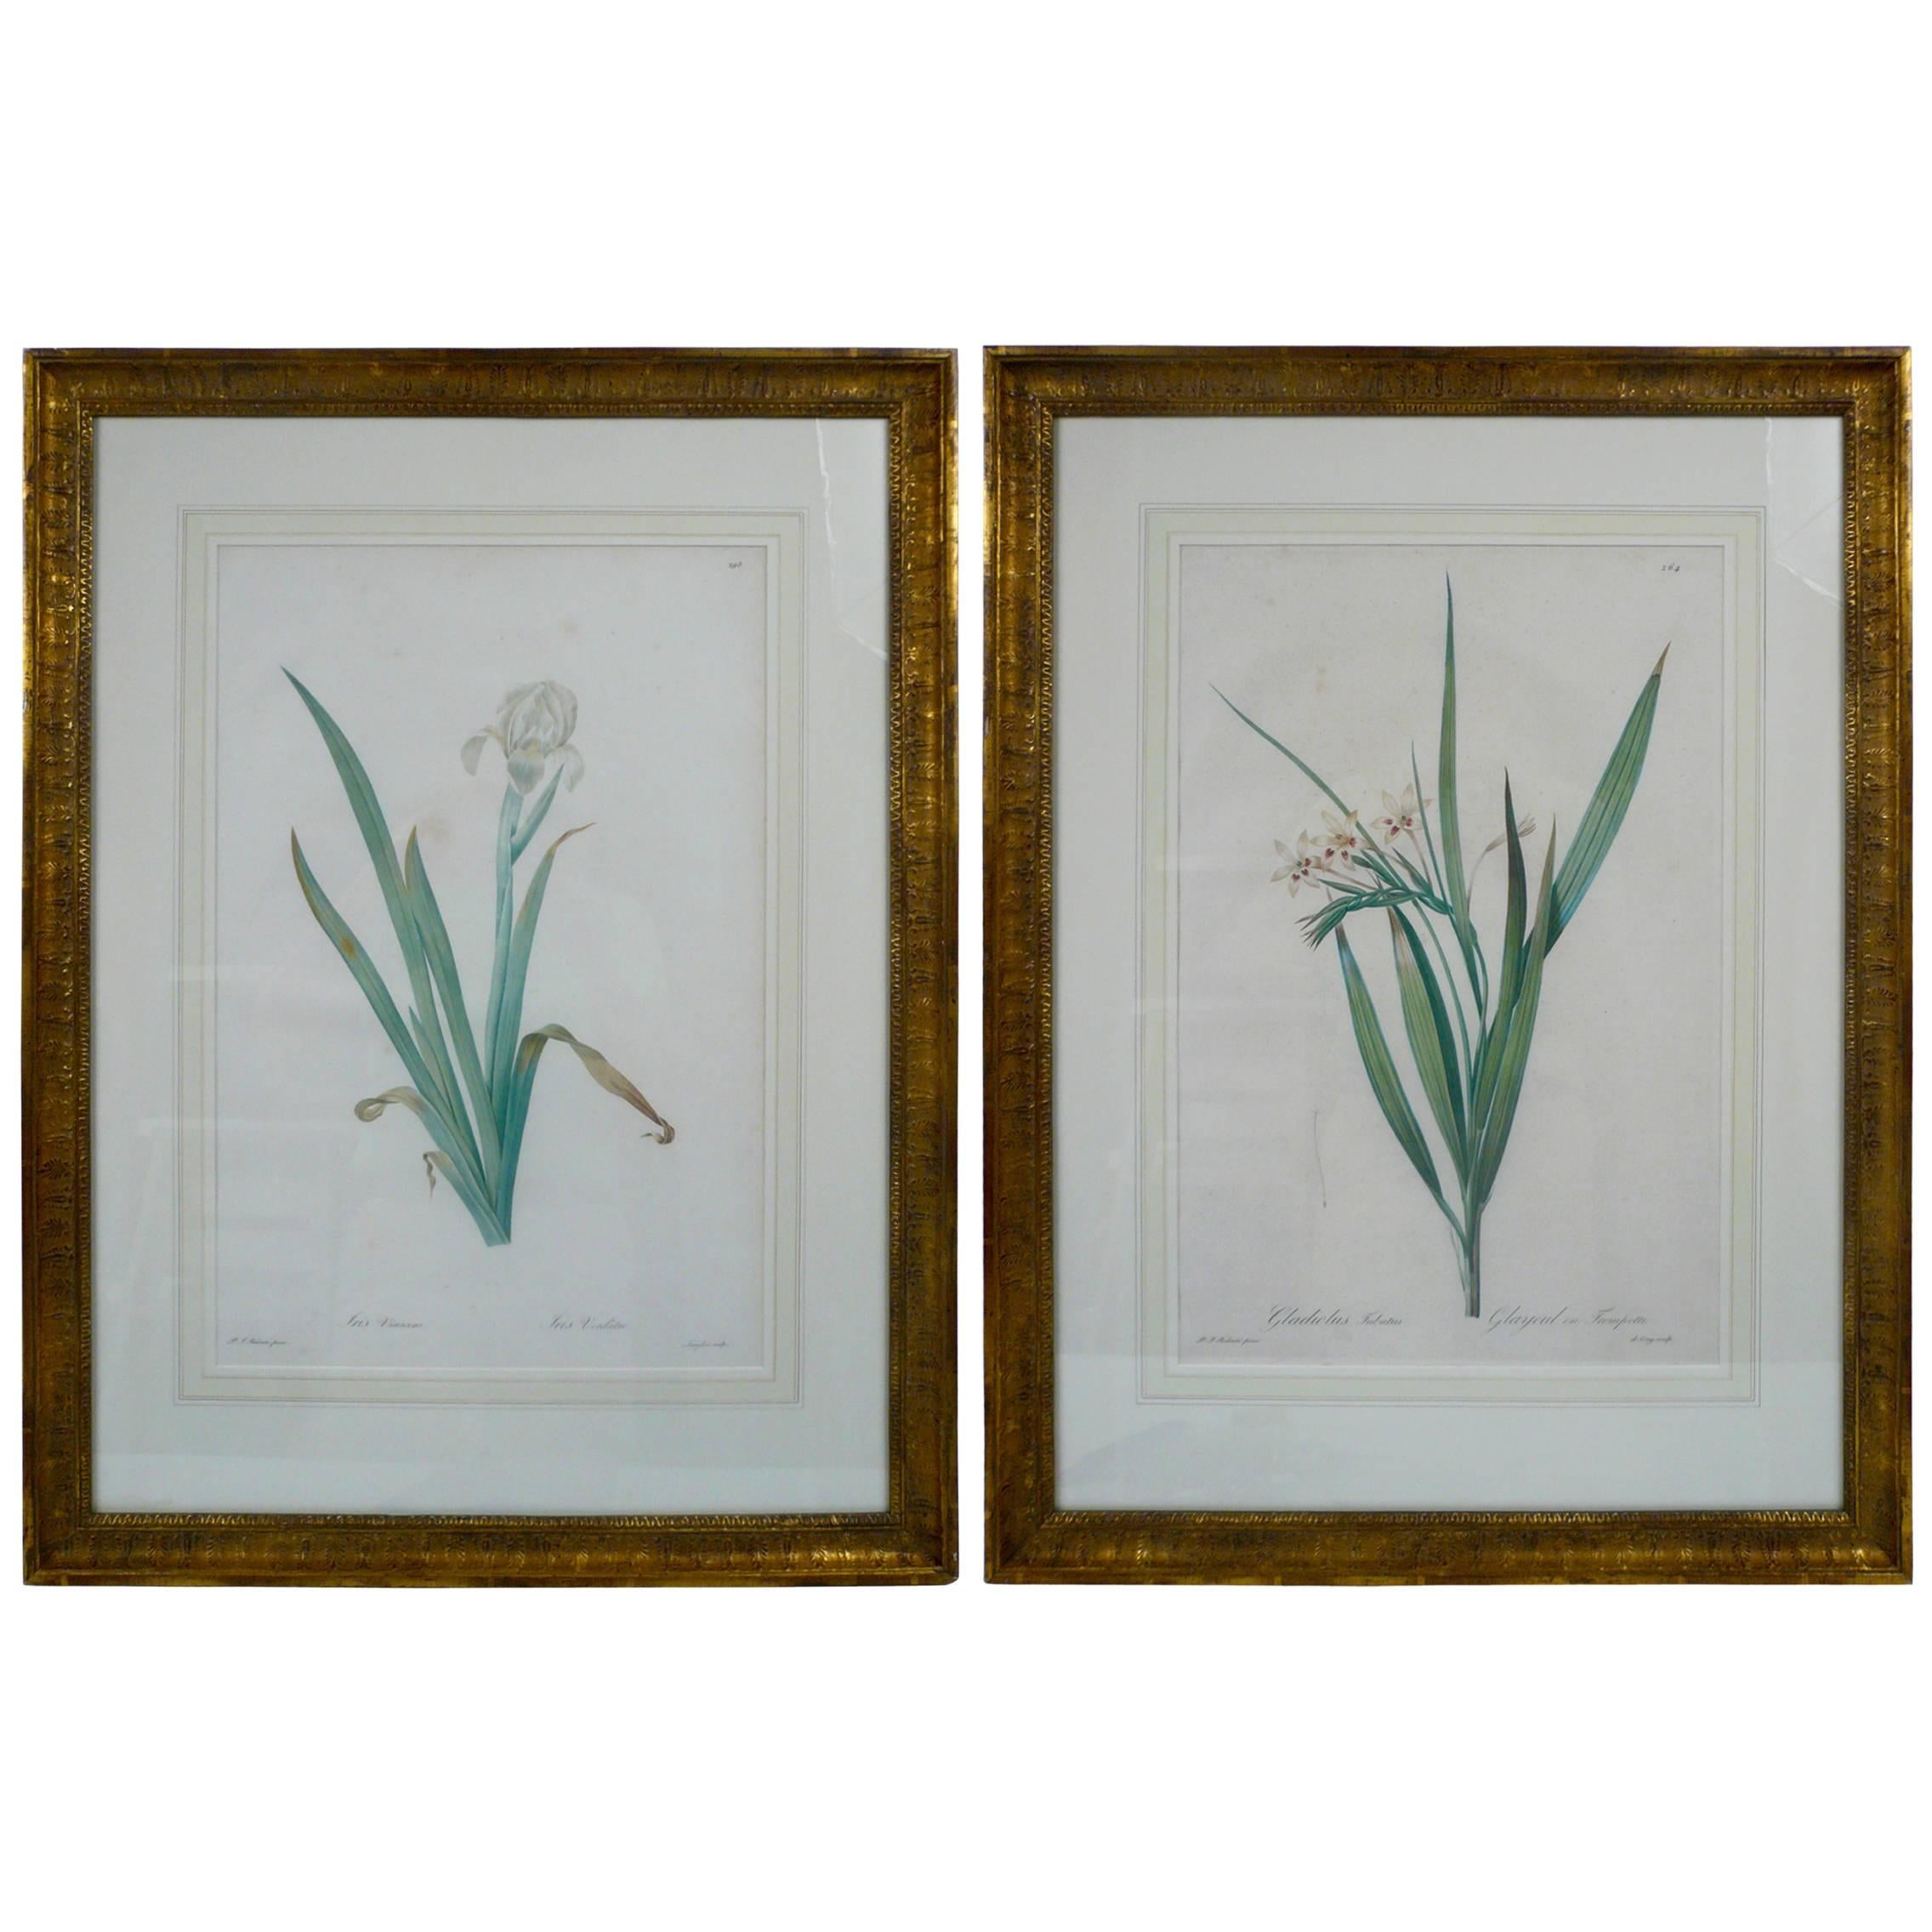 Pair of Botanical Stipple Engravings by P. J. Redoute